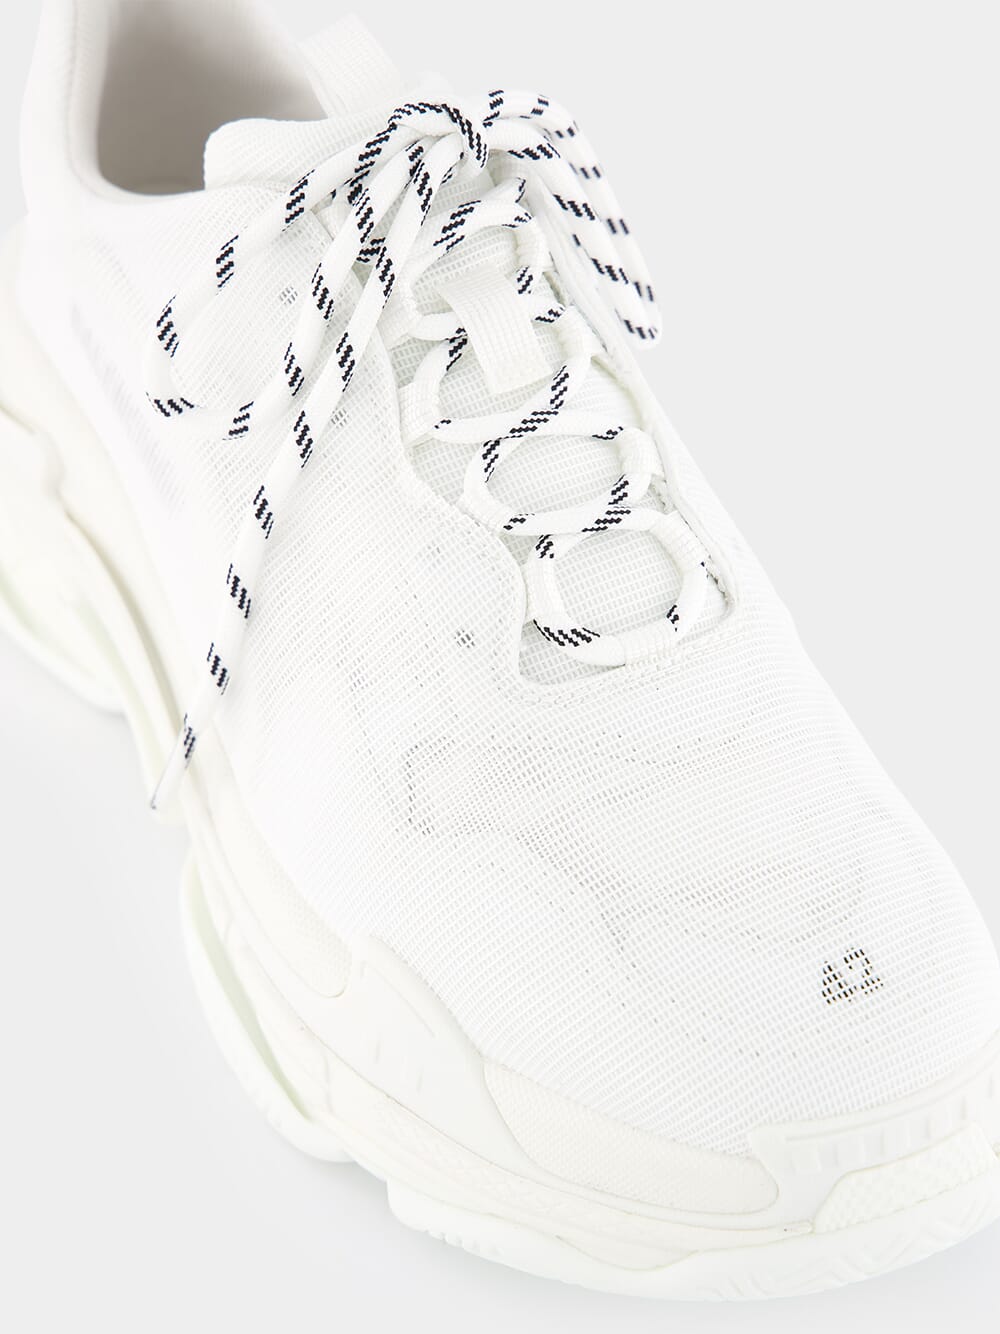 Triple S White Sneakers